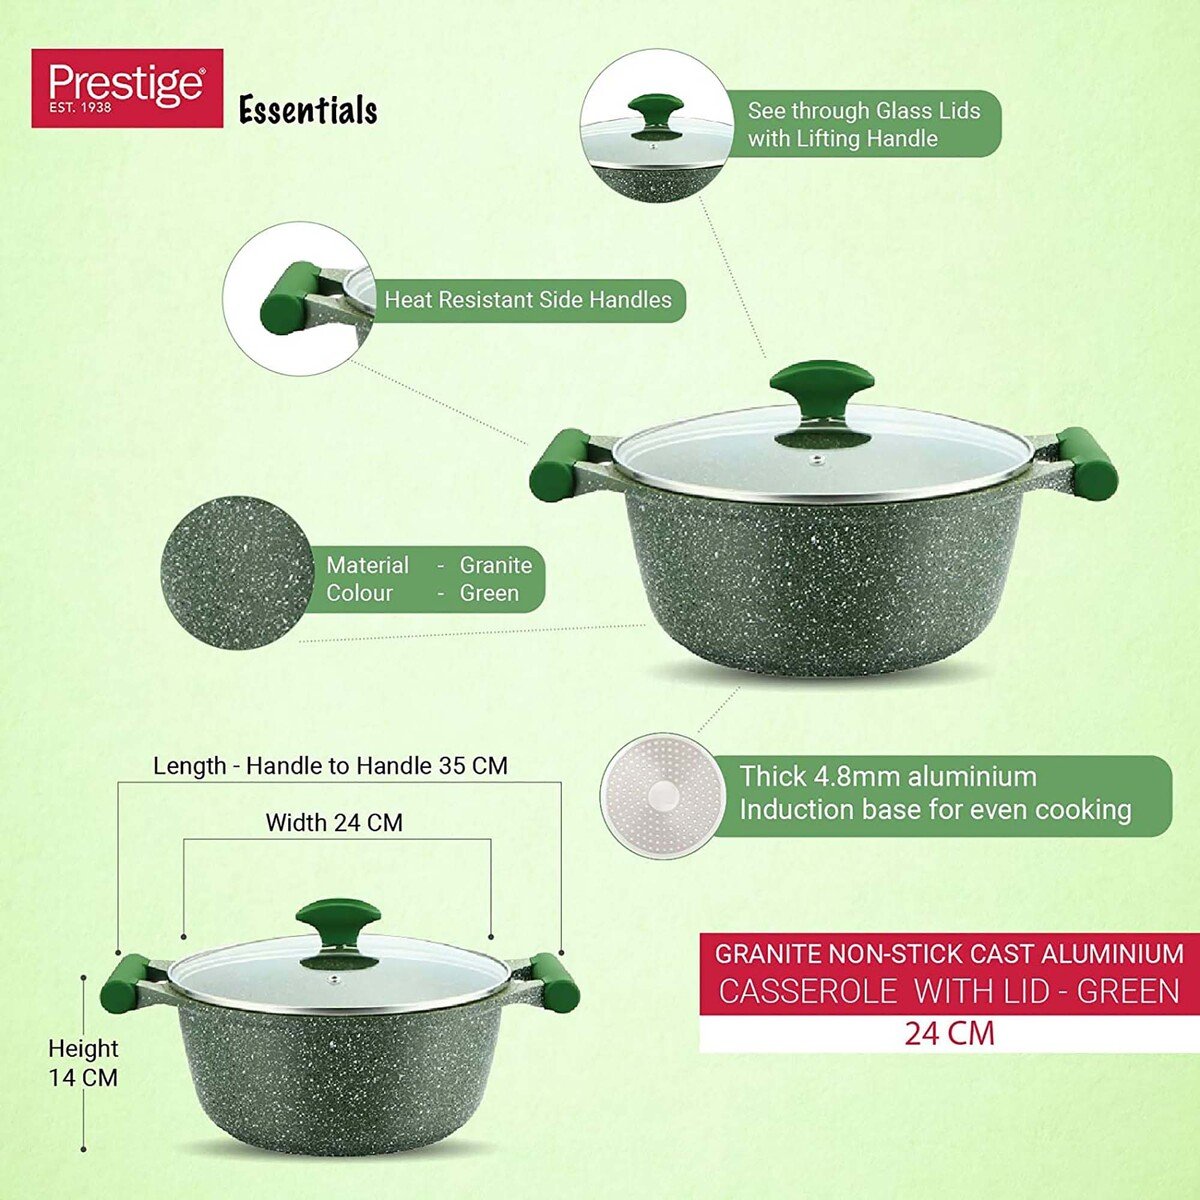 Prestige Essentials Granite Non-Stick Cast Aluminium Casserole with Lid, 24 cm, Green, PR81109